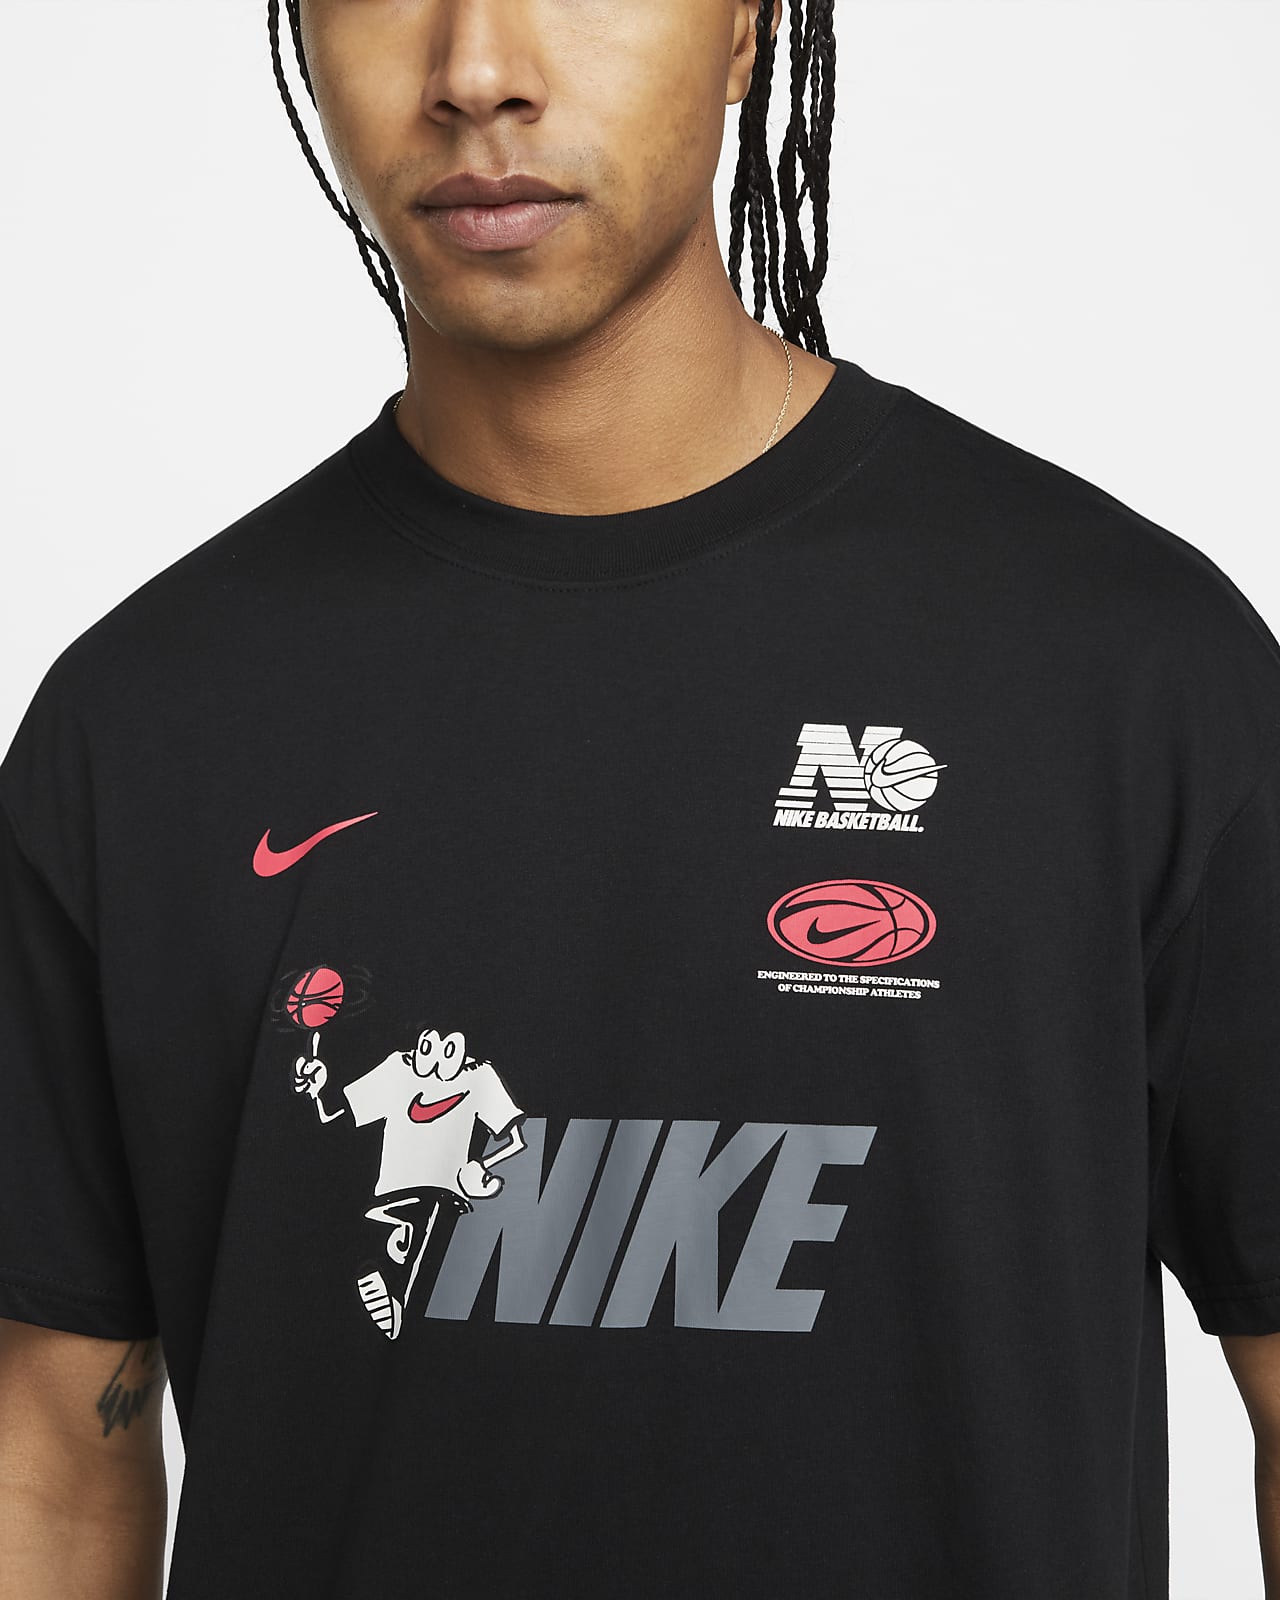 Racional Samuel Espíritu Nike Men's Basketball T-Shirt. Nike.com